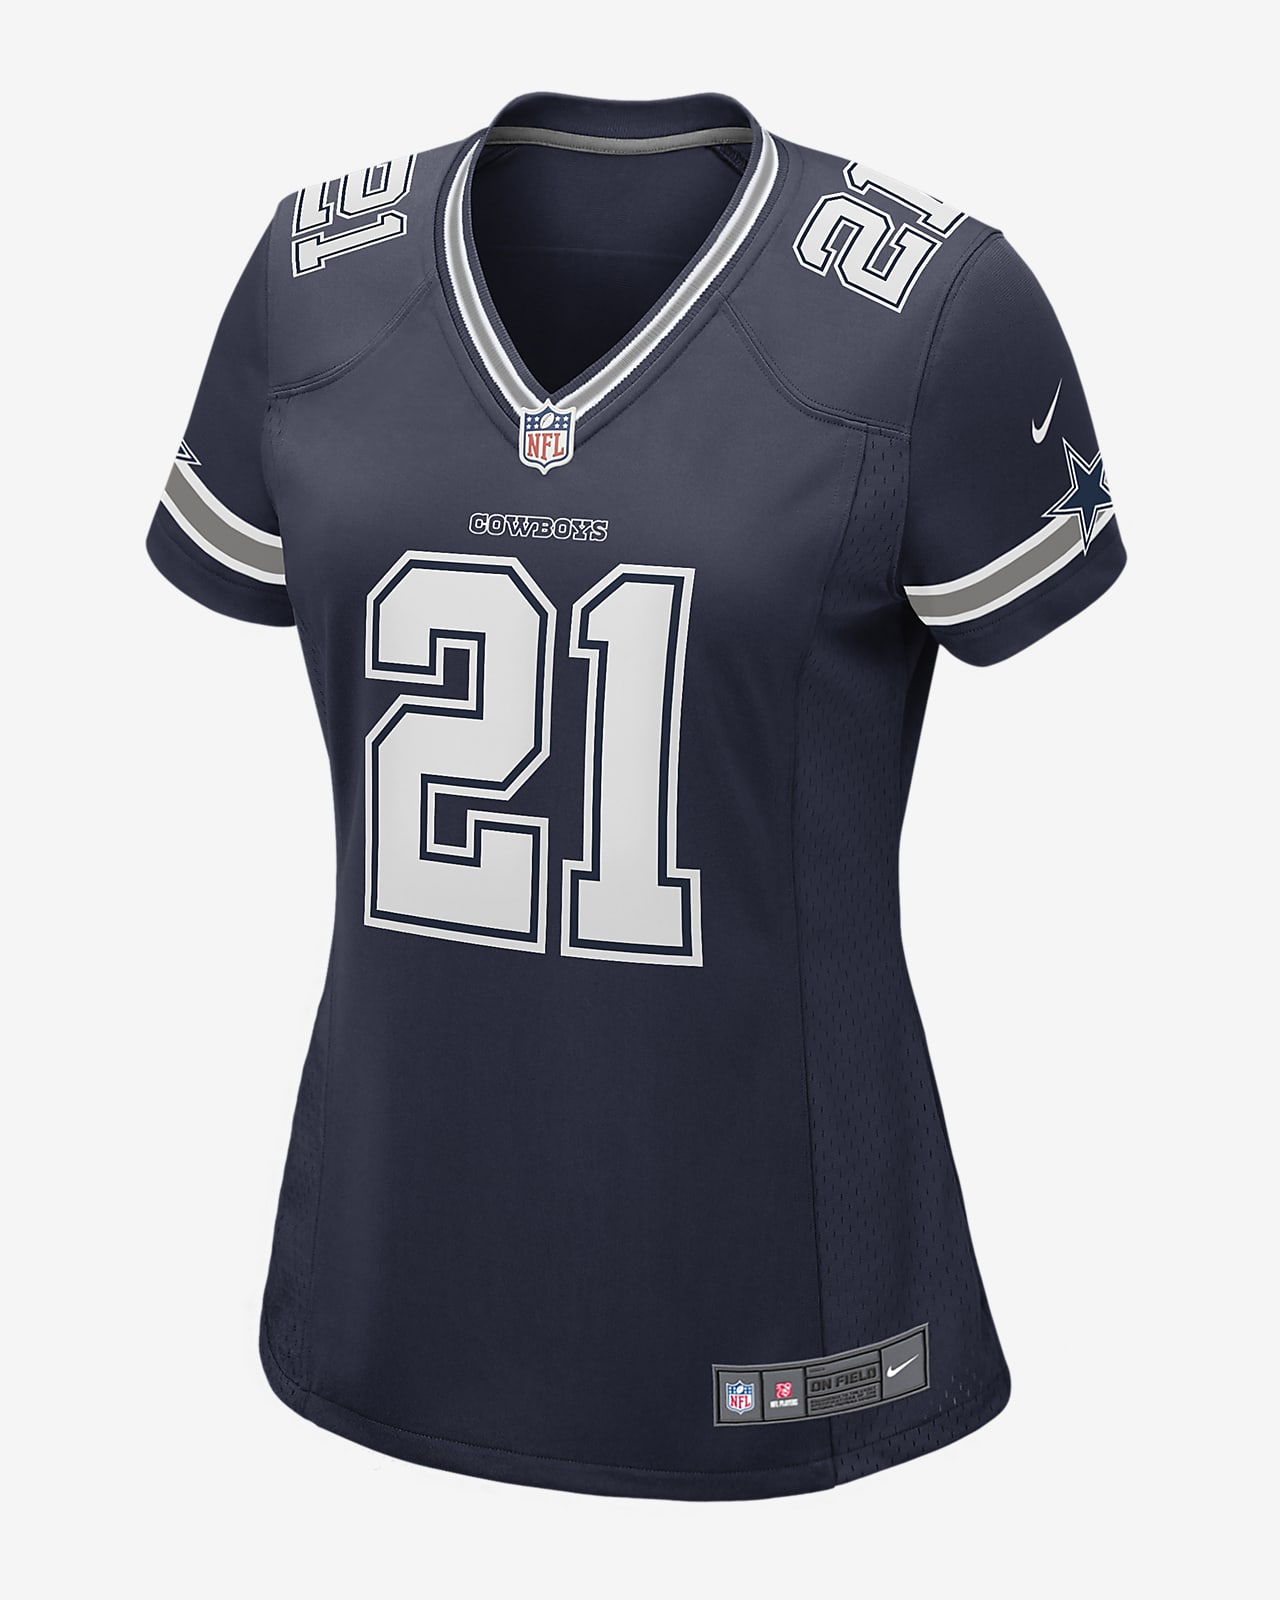 NFL Dallas Cowboys (Ezekiel Elliott) Women's Game Football Jersey. Nike.com